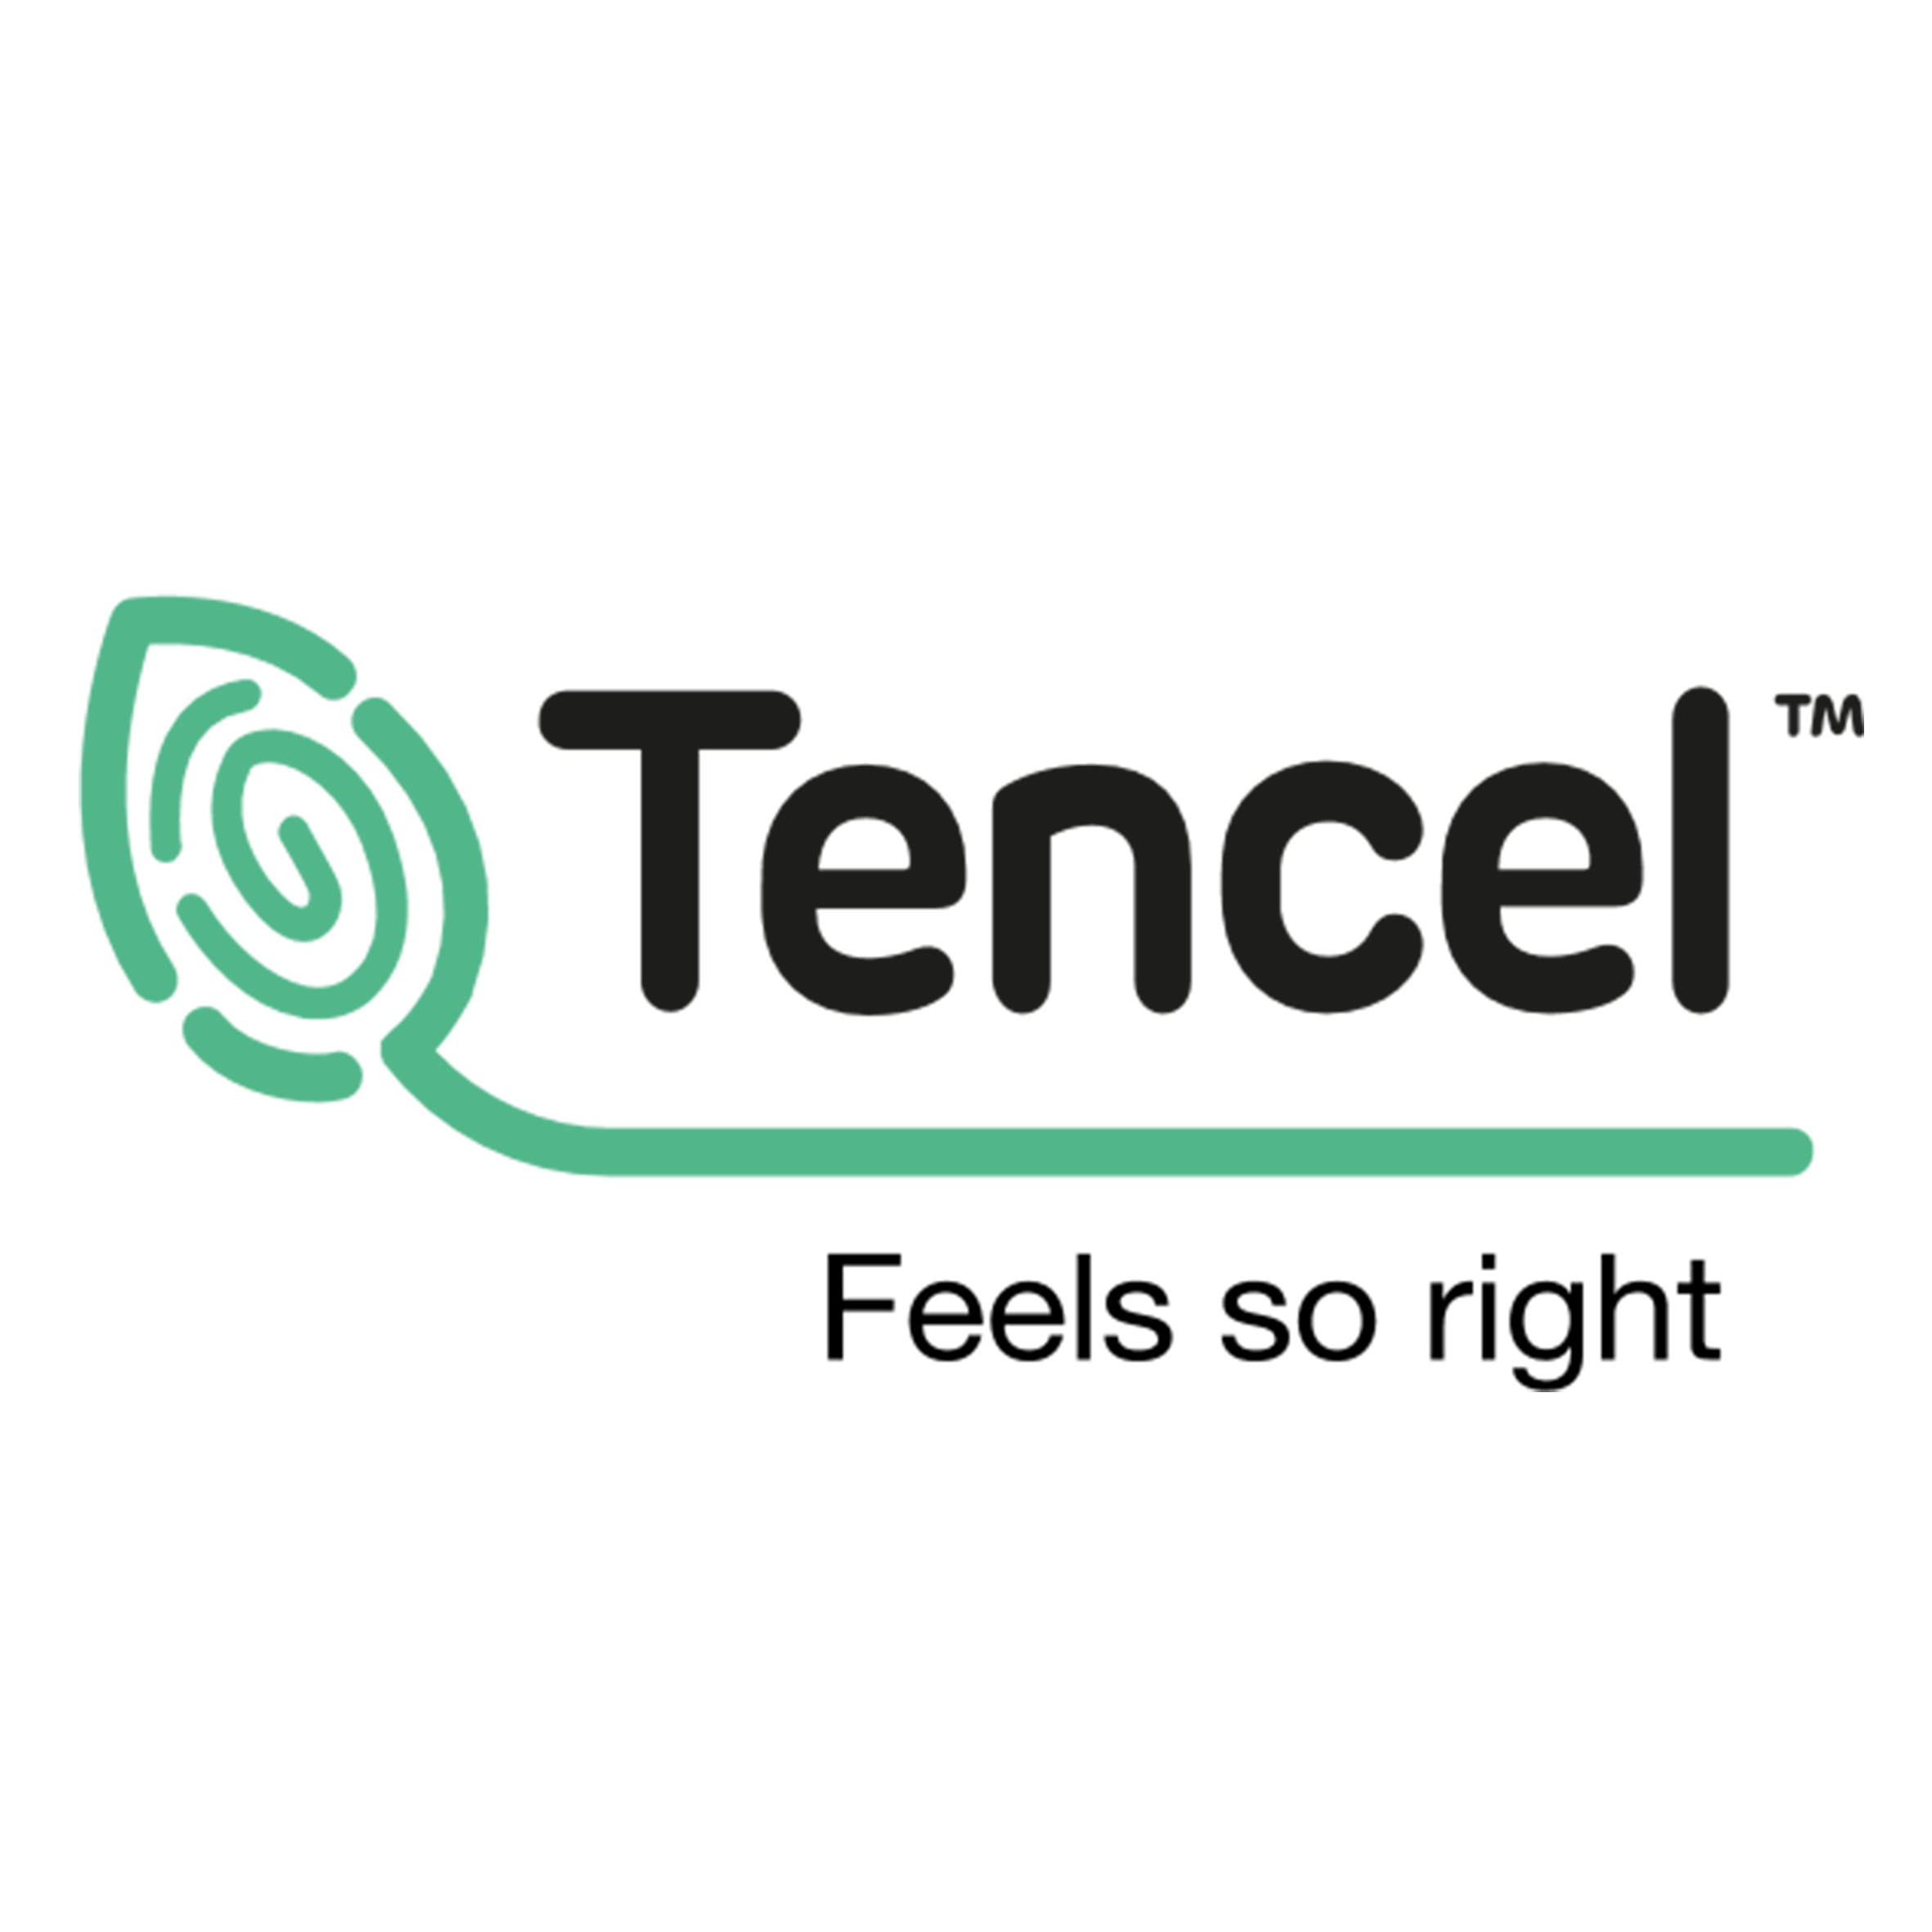 tencel